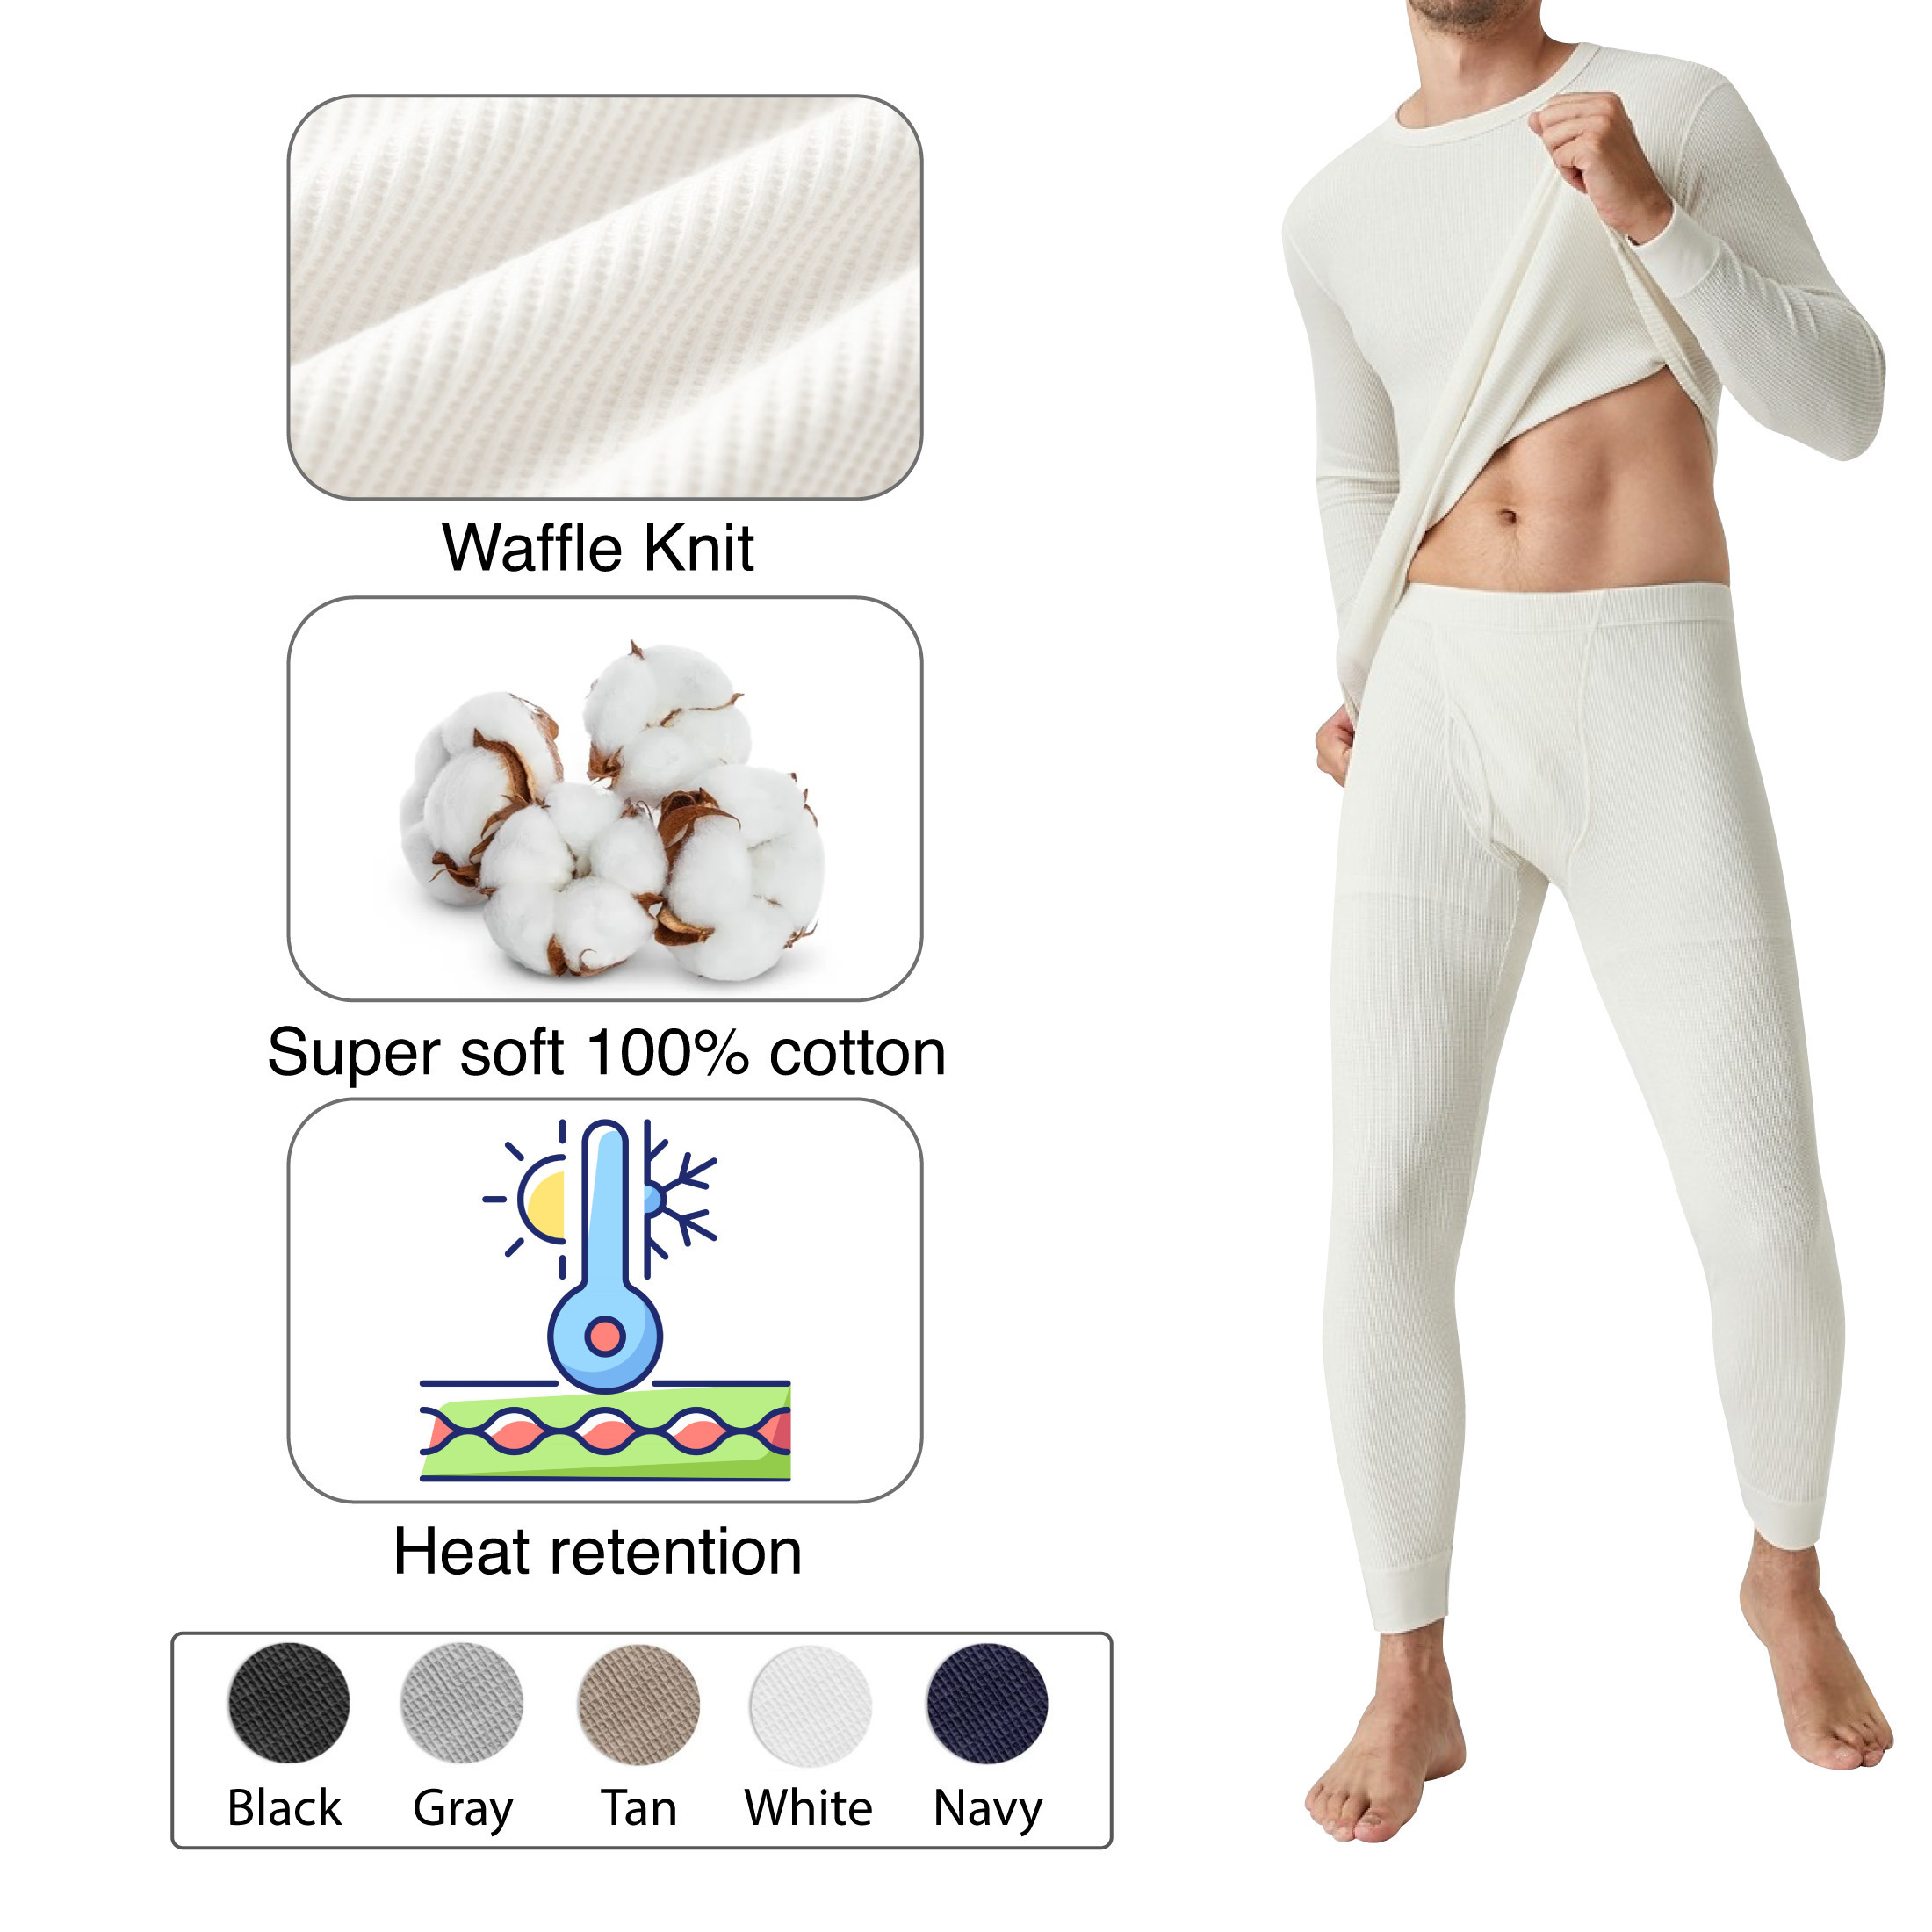 2-Piece: Men's Super Soft Cotton Waffle Knit Winter Thermal Underwear Set - Tan, X-Large